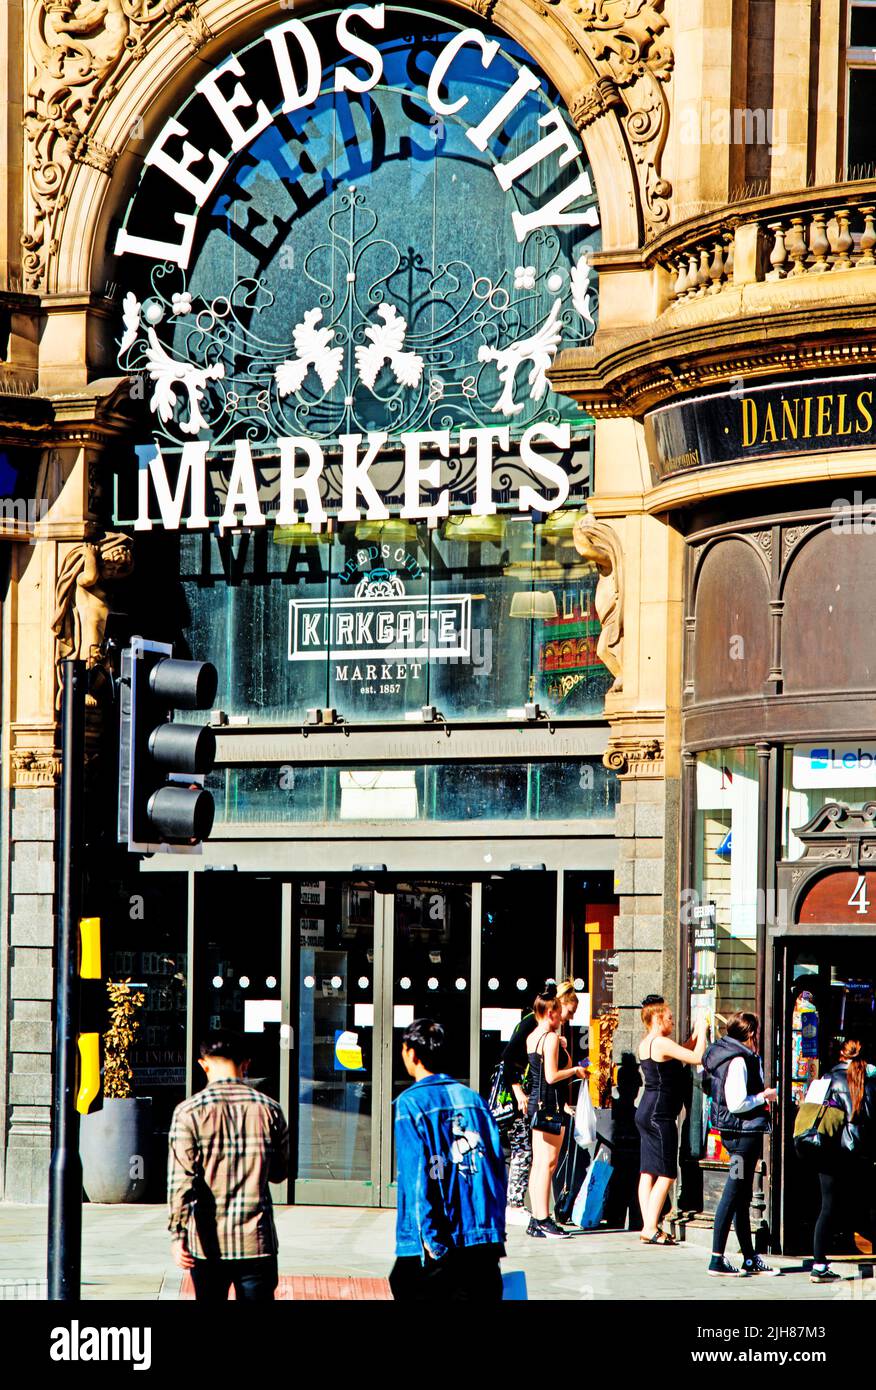 Leeds City Markets, Kirkgate, Leeds, England Stock Photo